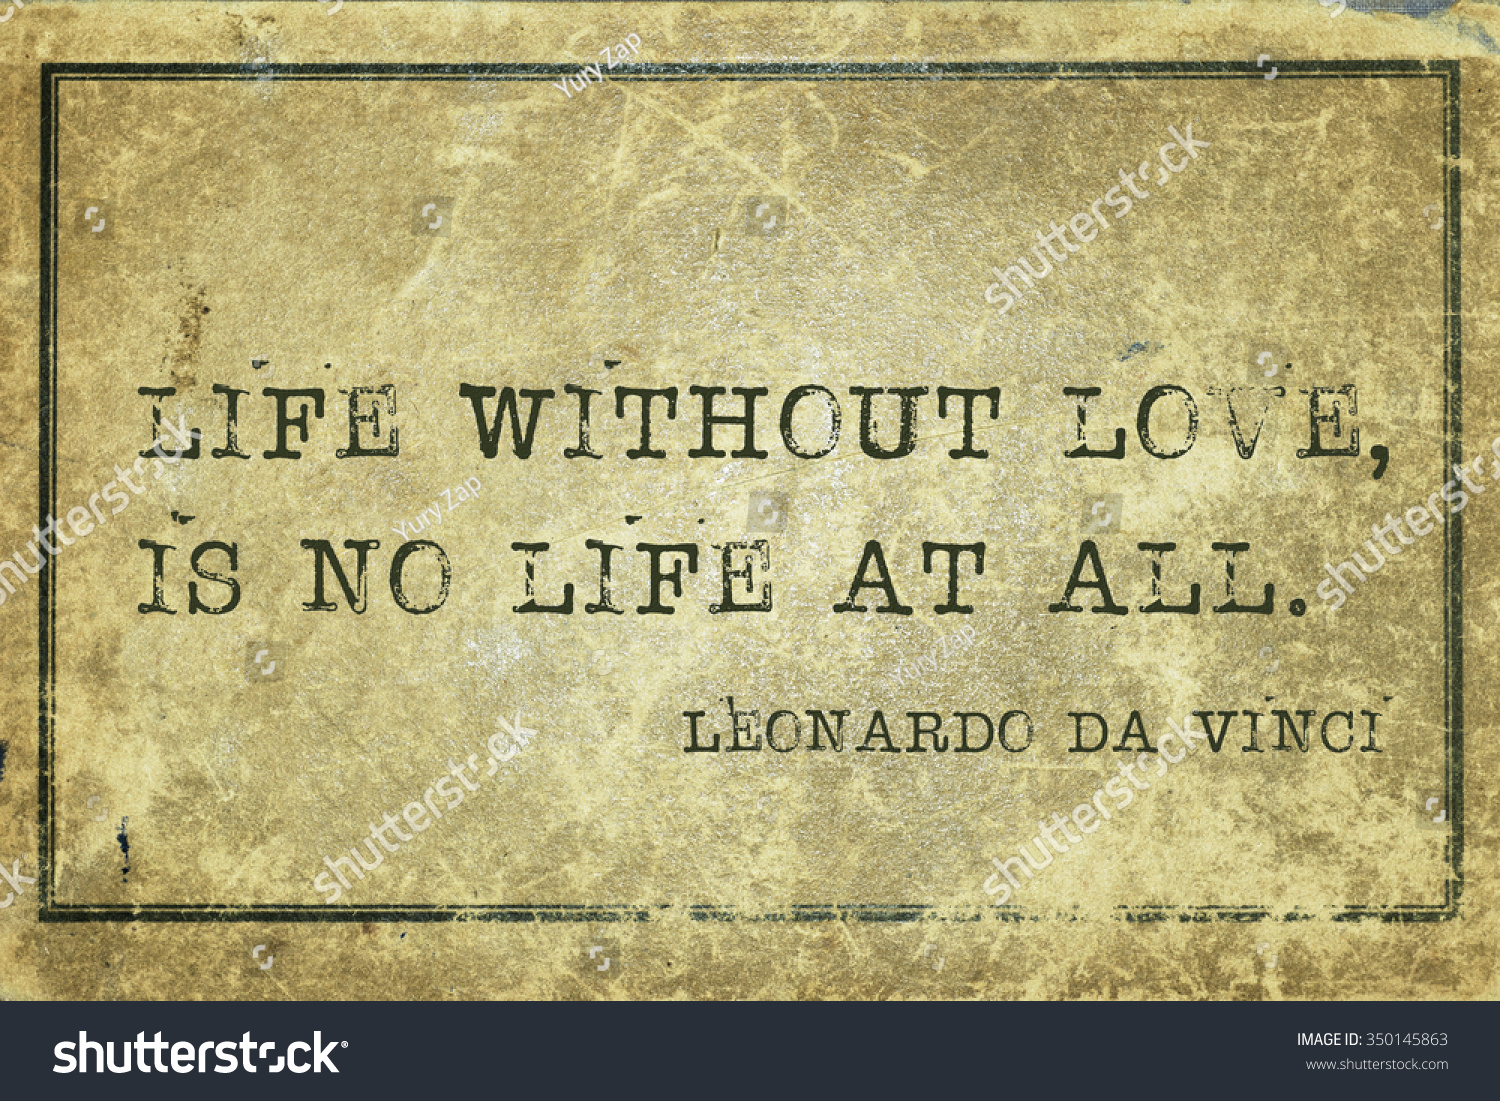 life without love is no life at all ancient Italian artist Leonardo da Vinci